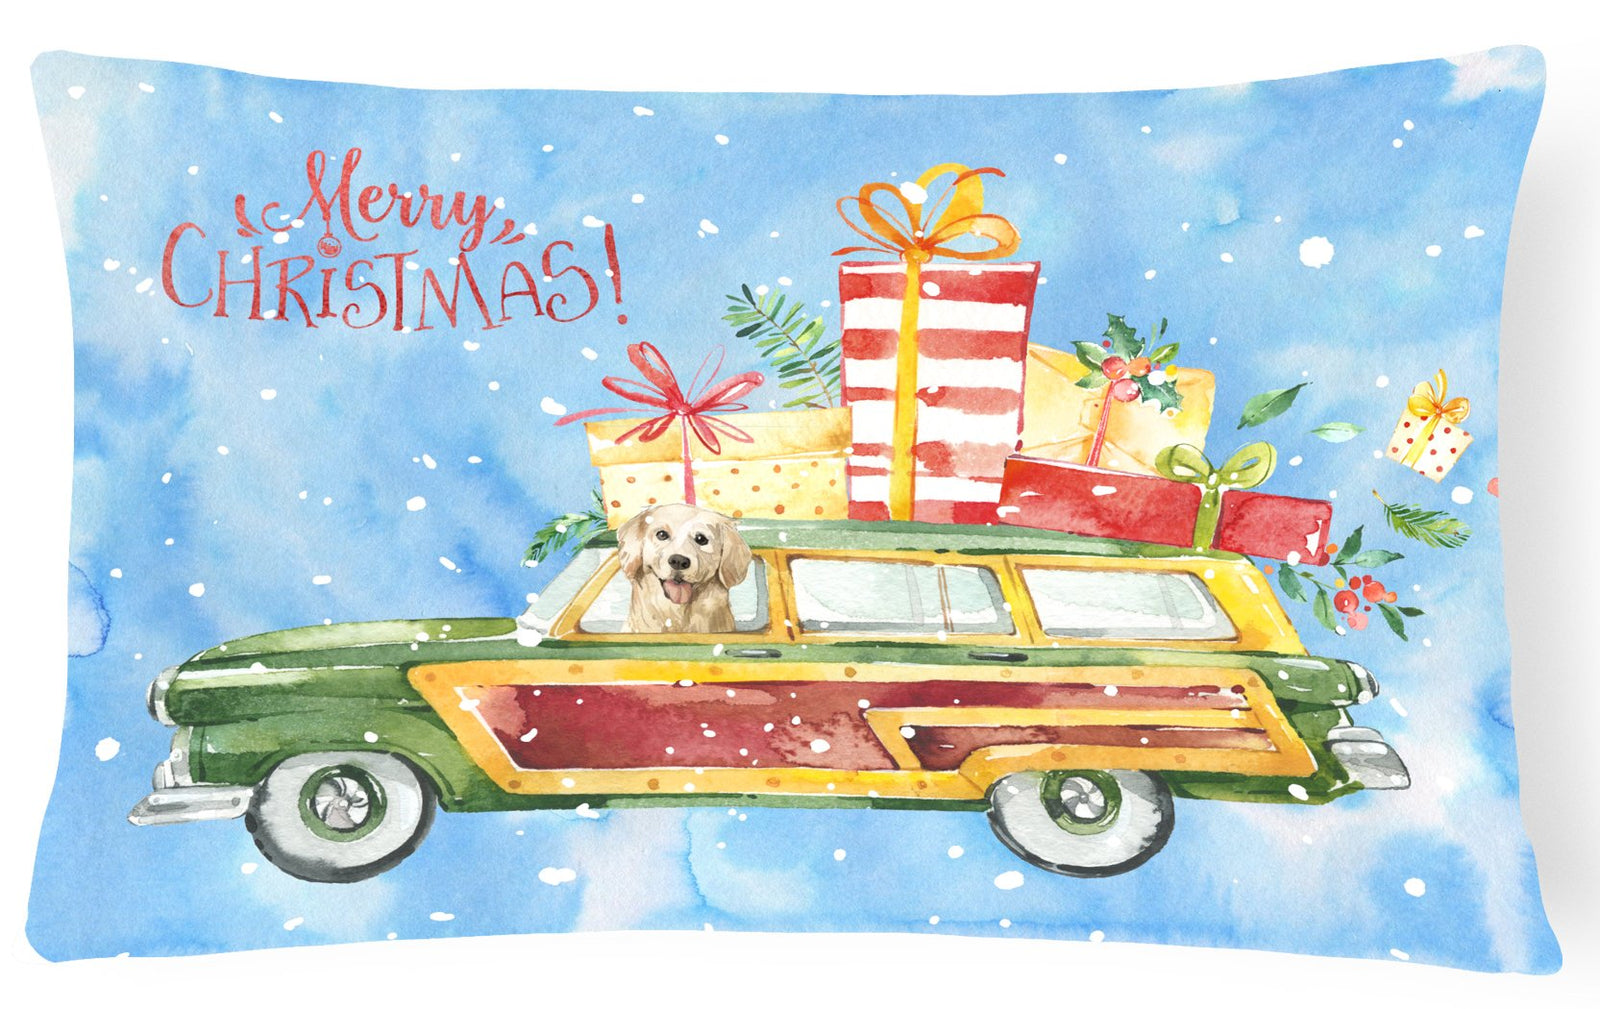 Merry Christmas Golden Retriever Canvas Fabric Decorative Pillow CK2407PW1216 by Caroline's Treasures